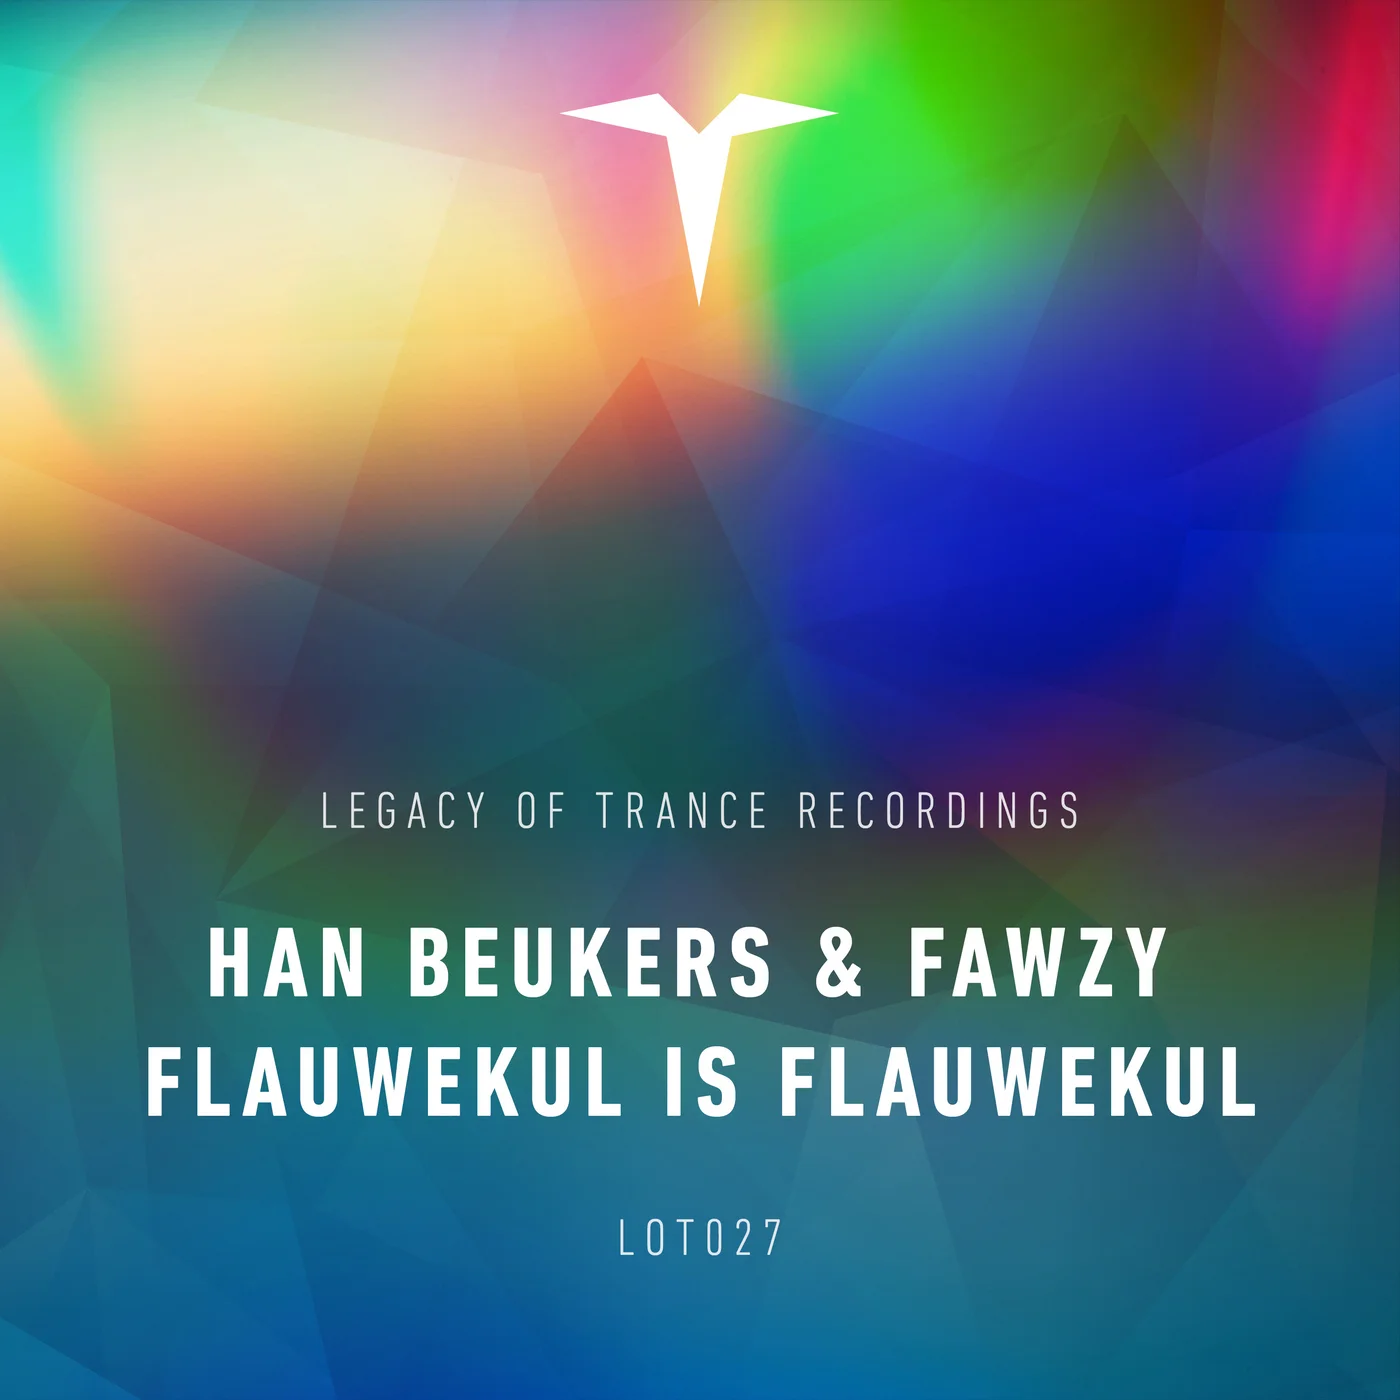 Han Beukers and Fawzy - Flauwekul is Flauwekul